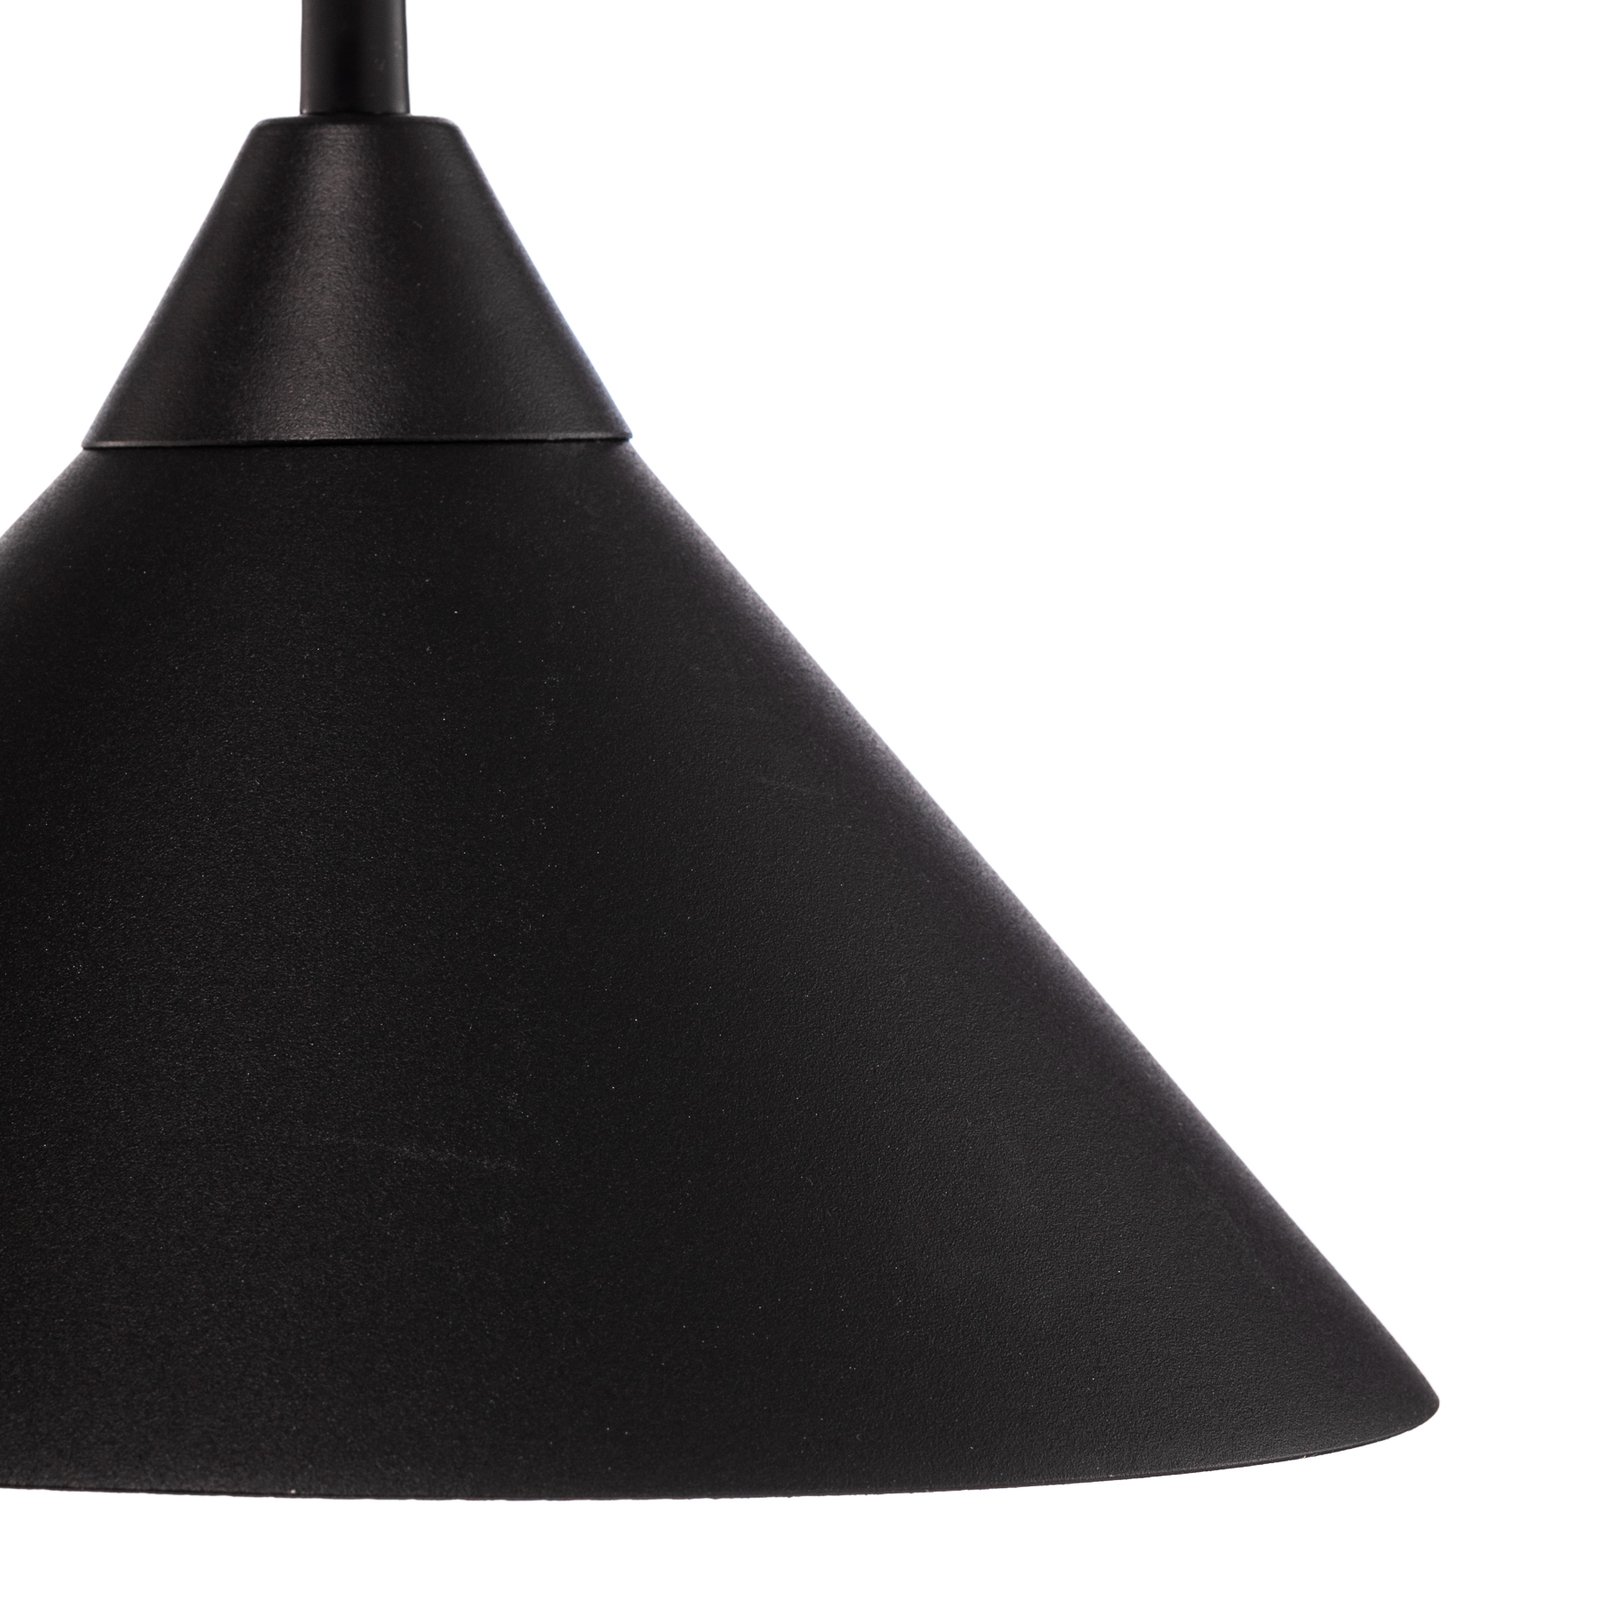 Hanglamp Ramo, 2-lamps, zwart